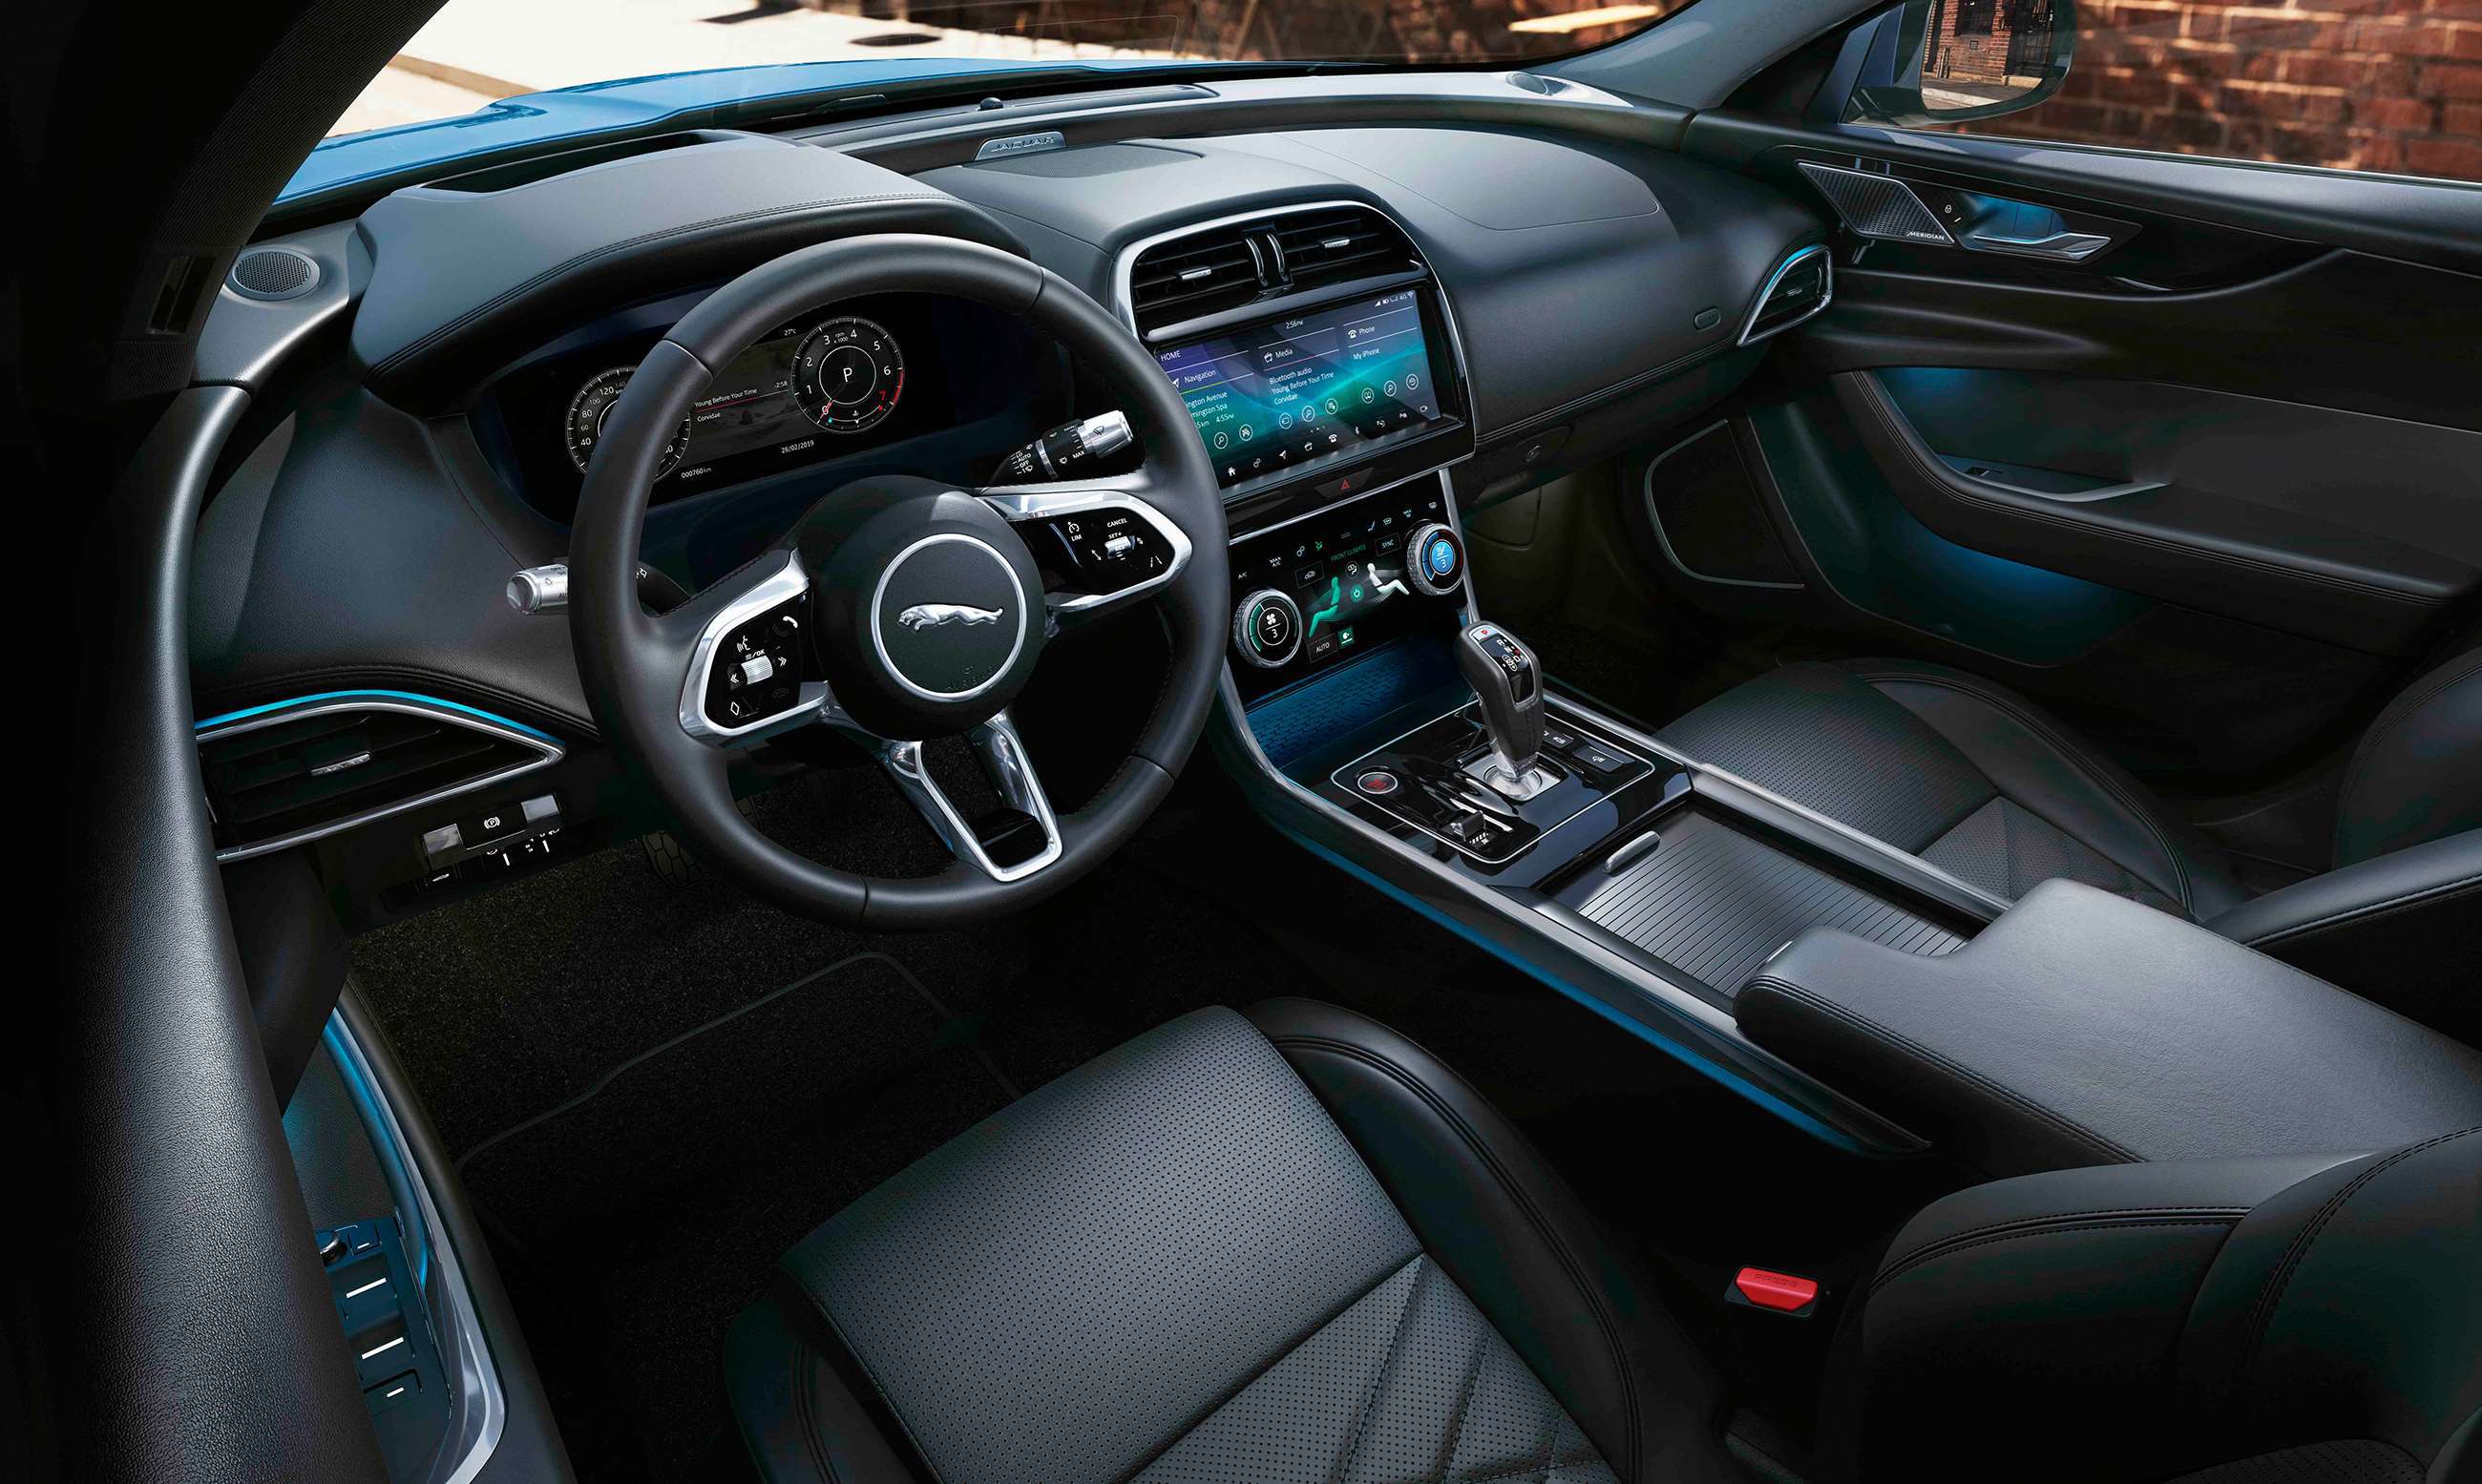 jaguar-xe-2019-interior-goodwood-27022019.jpg